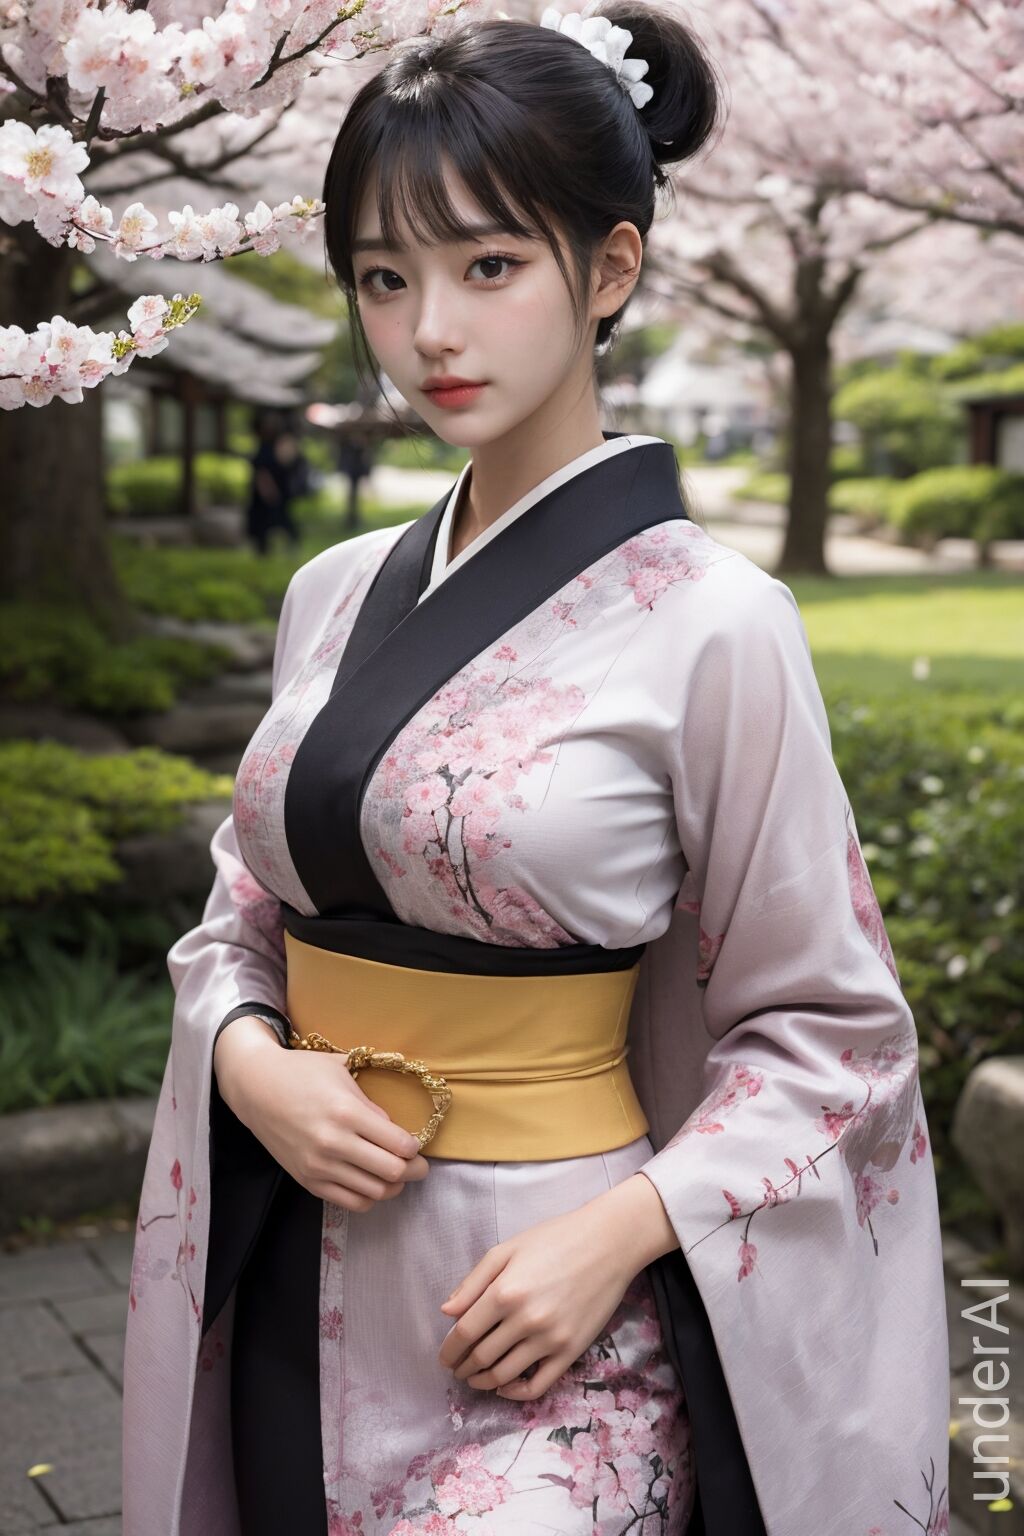 kimono_cherry_blossom_festival1_108834662_p1.jpg